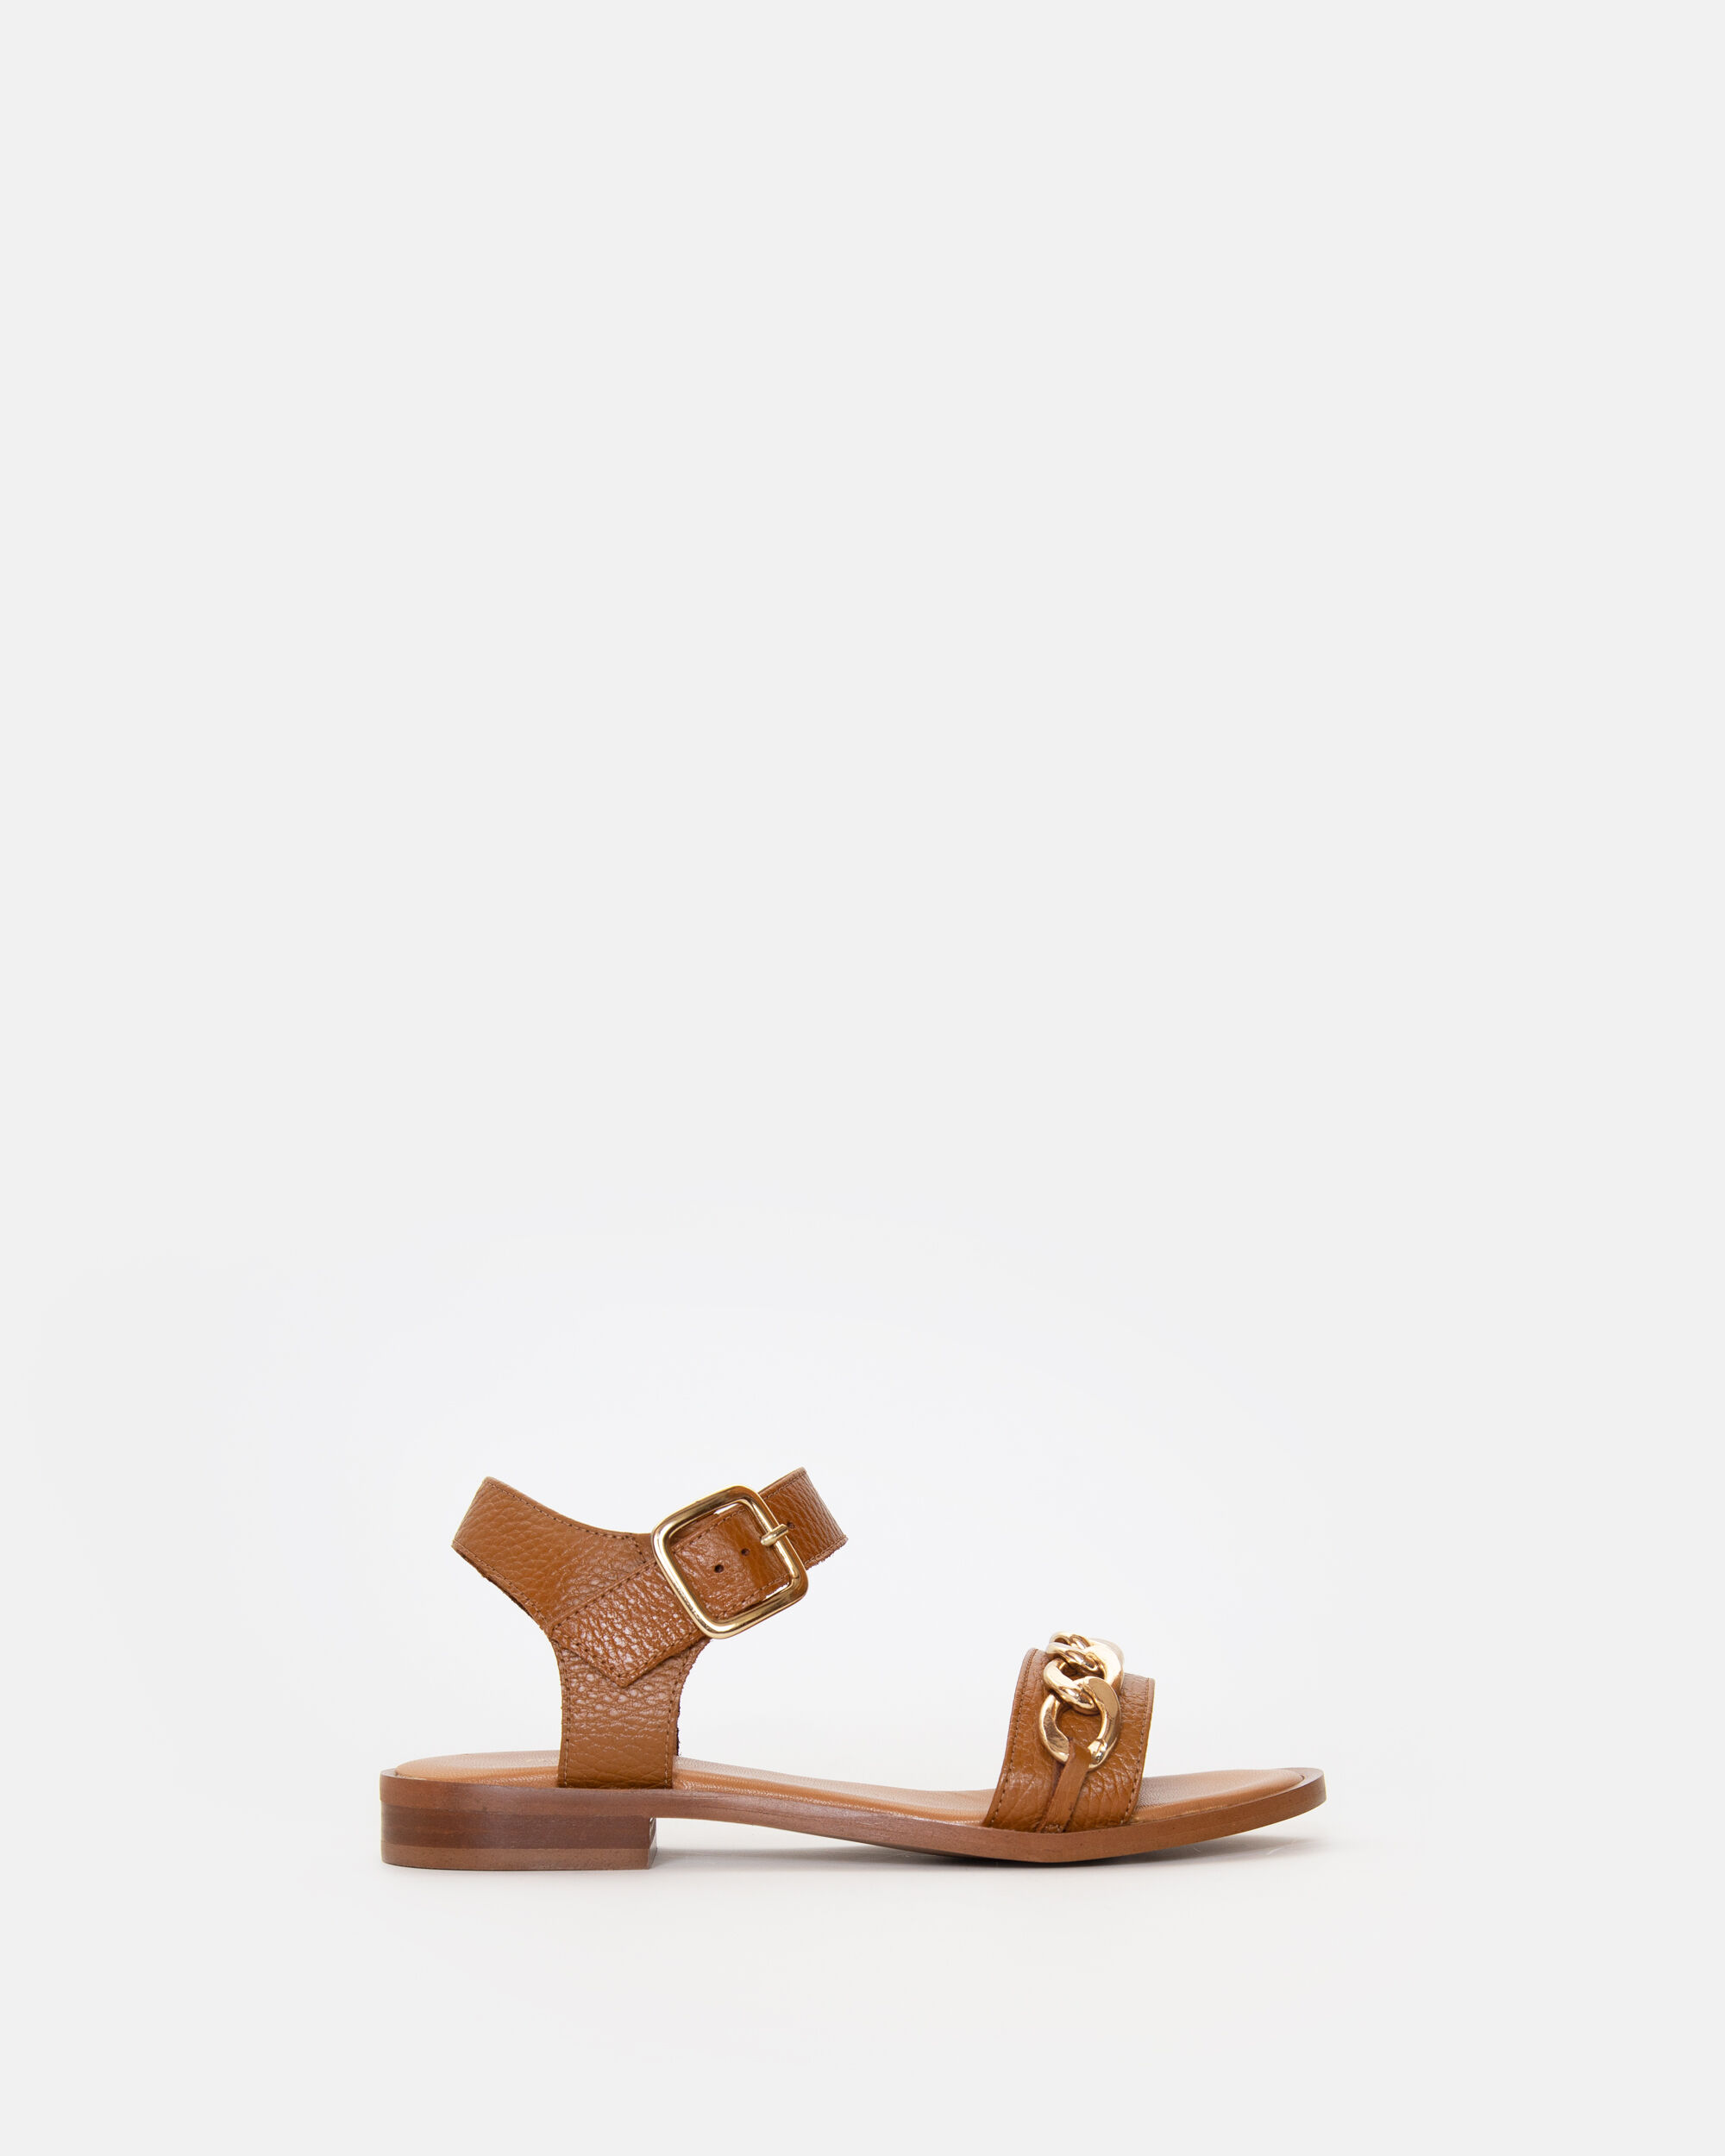 Women's flat sandal with buckle in cognac | Abbacino